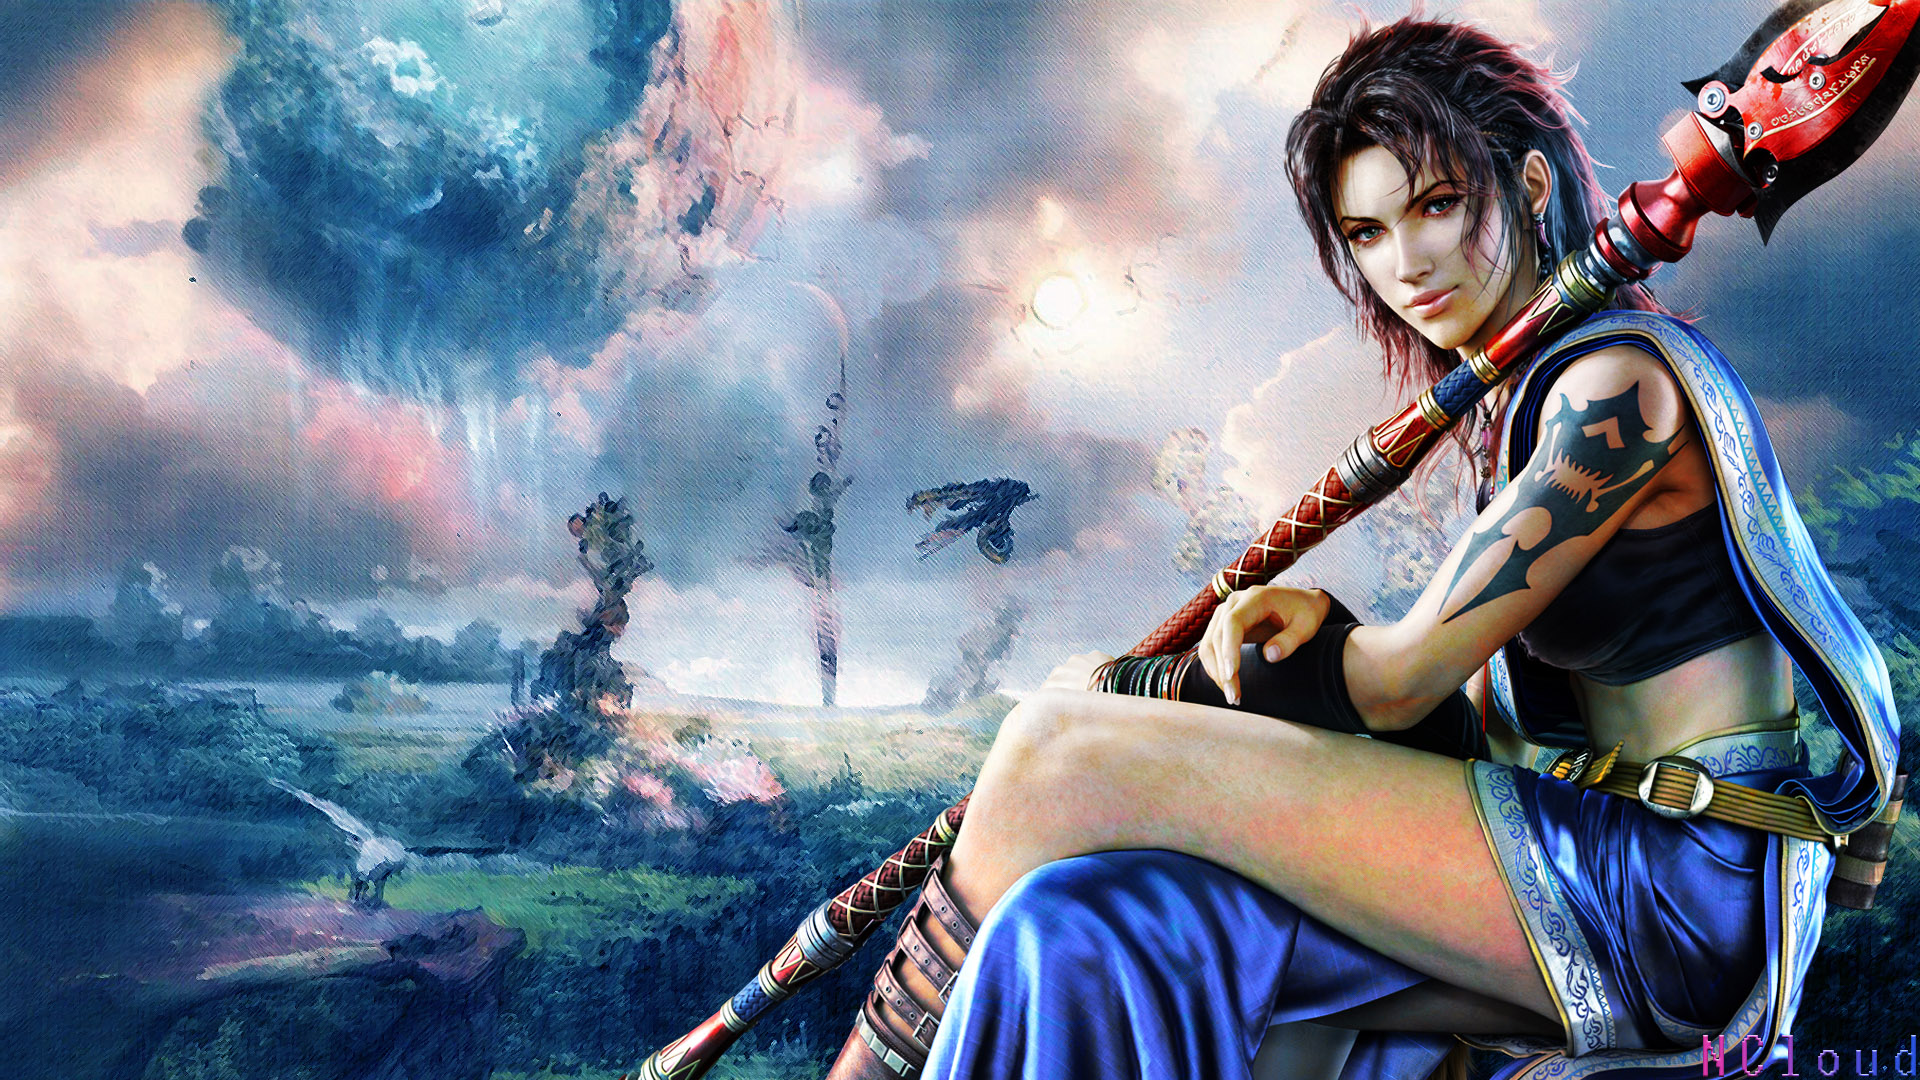 Free download Final Fantasy Game Wallpaper HD wallpapers Final Fantasy